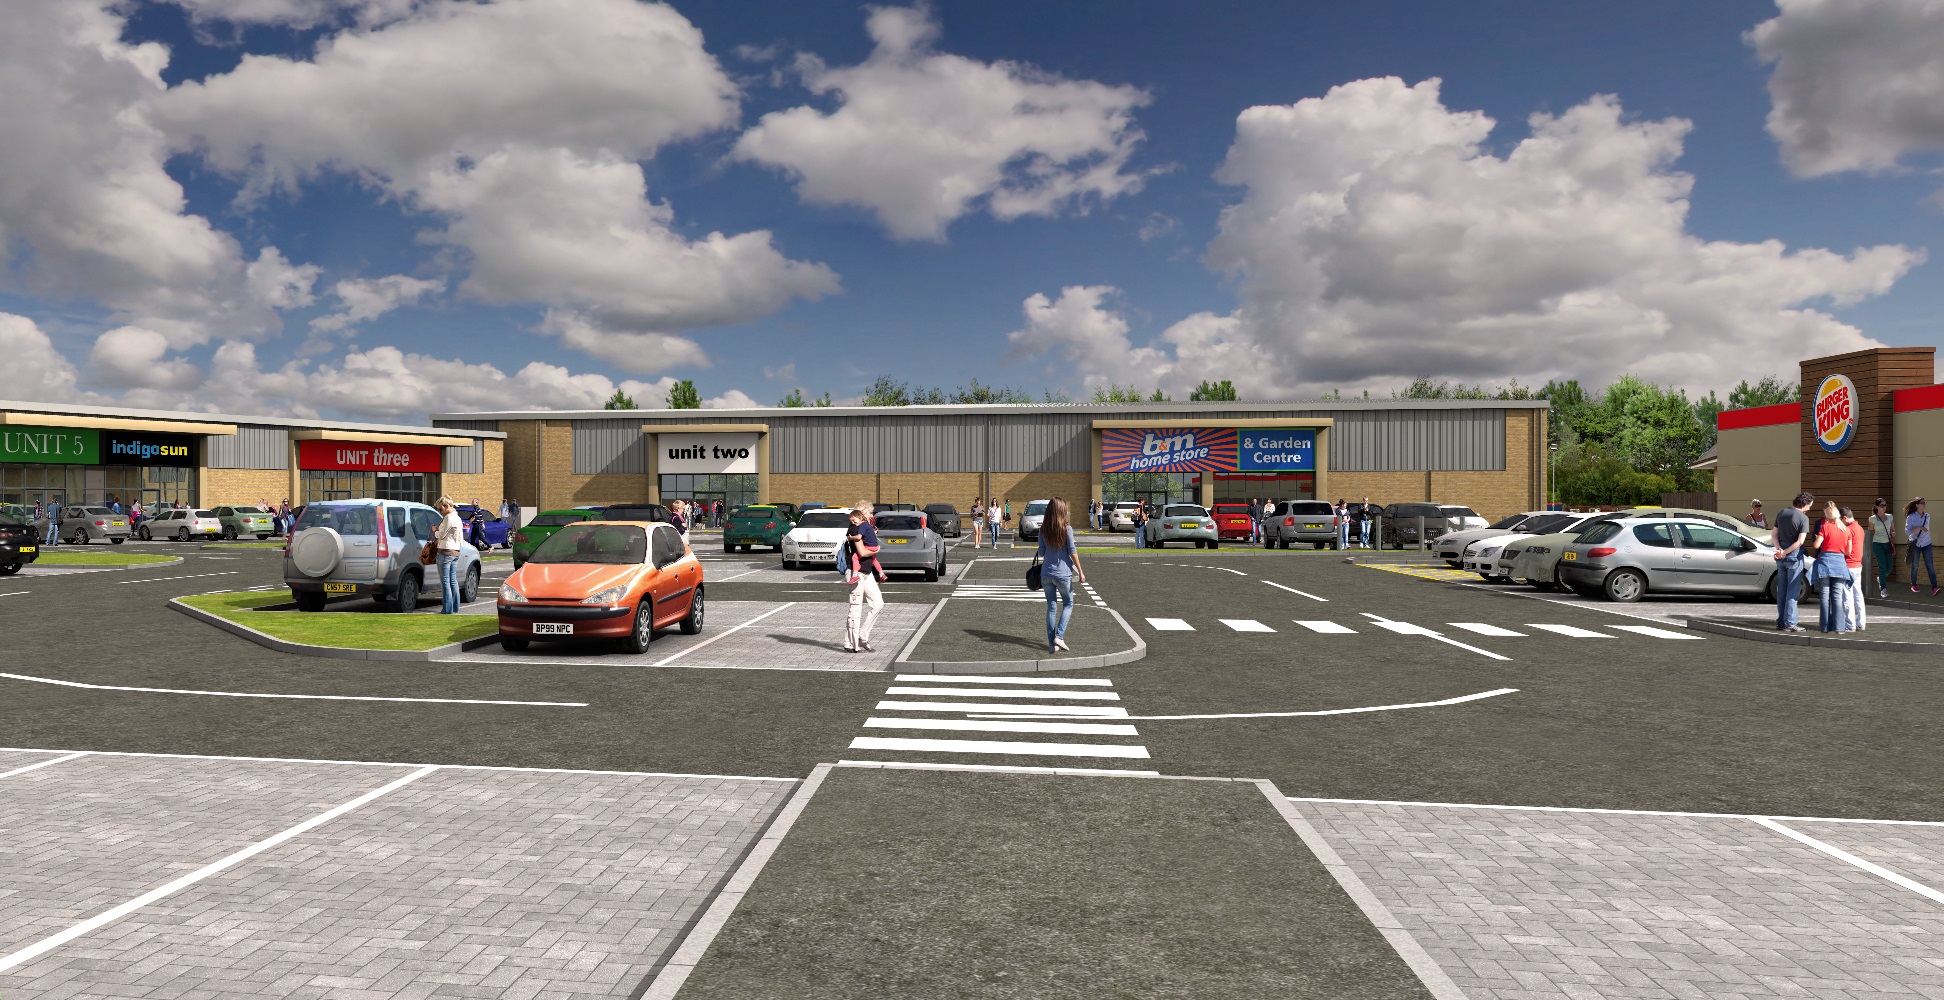 Construction starts on £7.5m retail park in Cupar